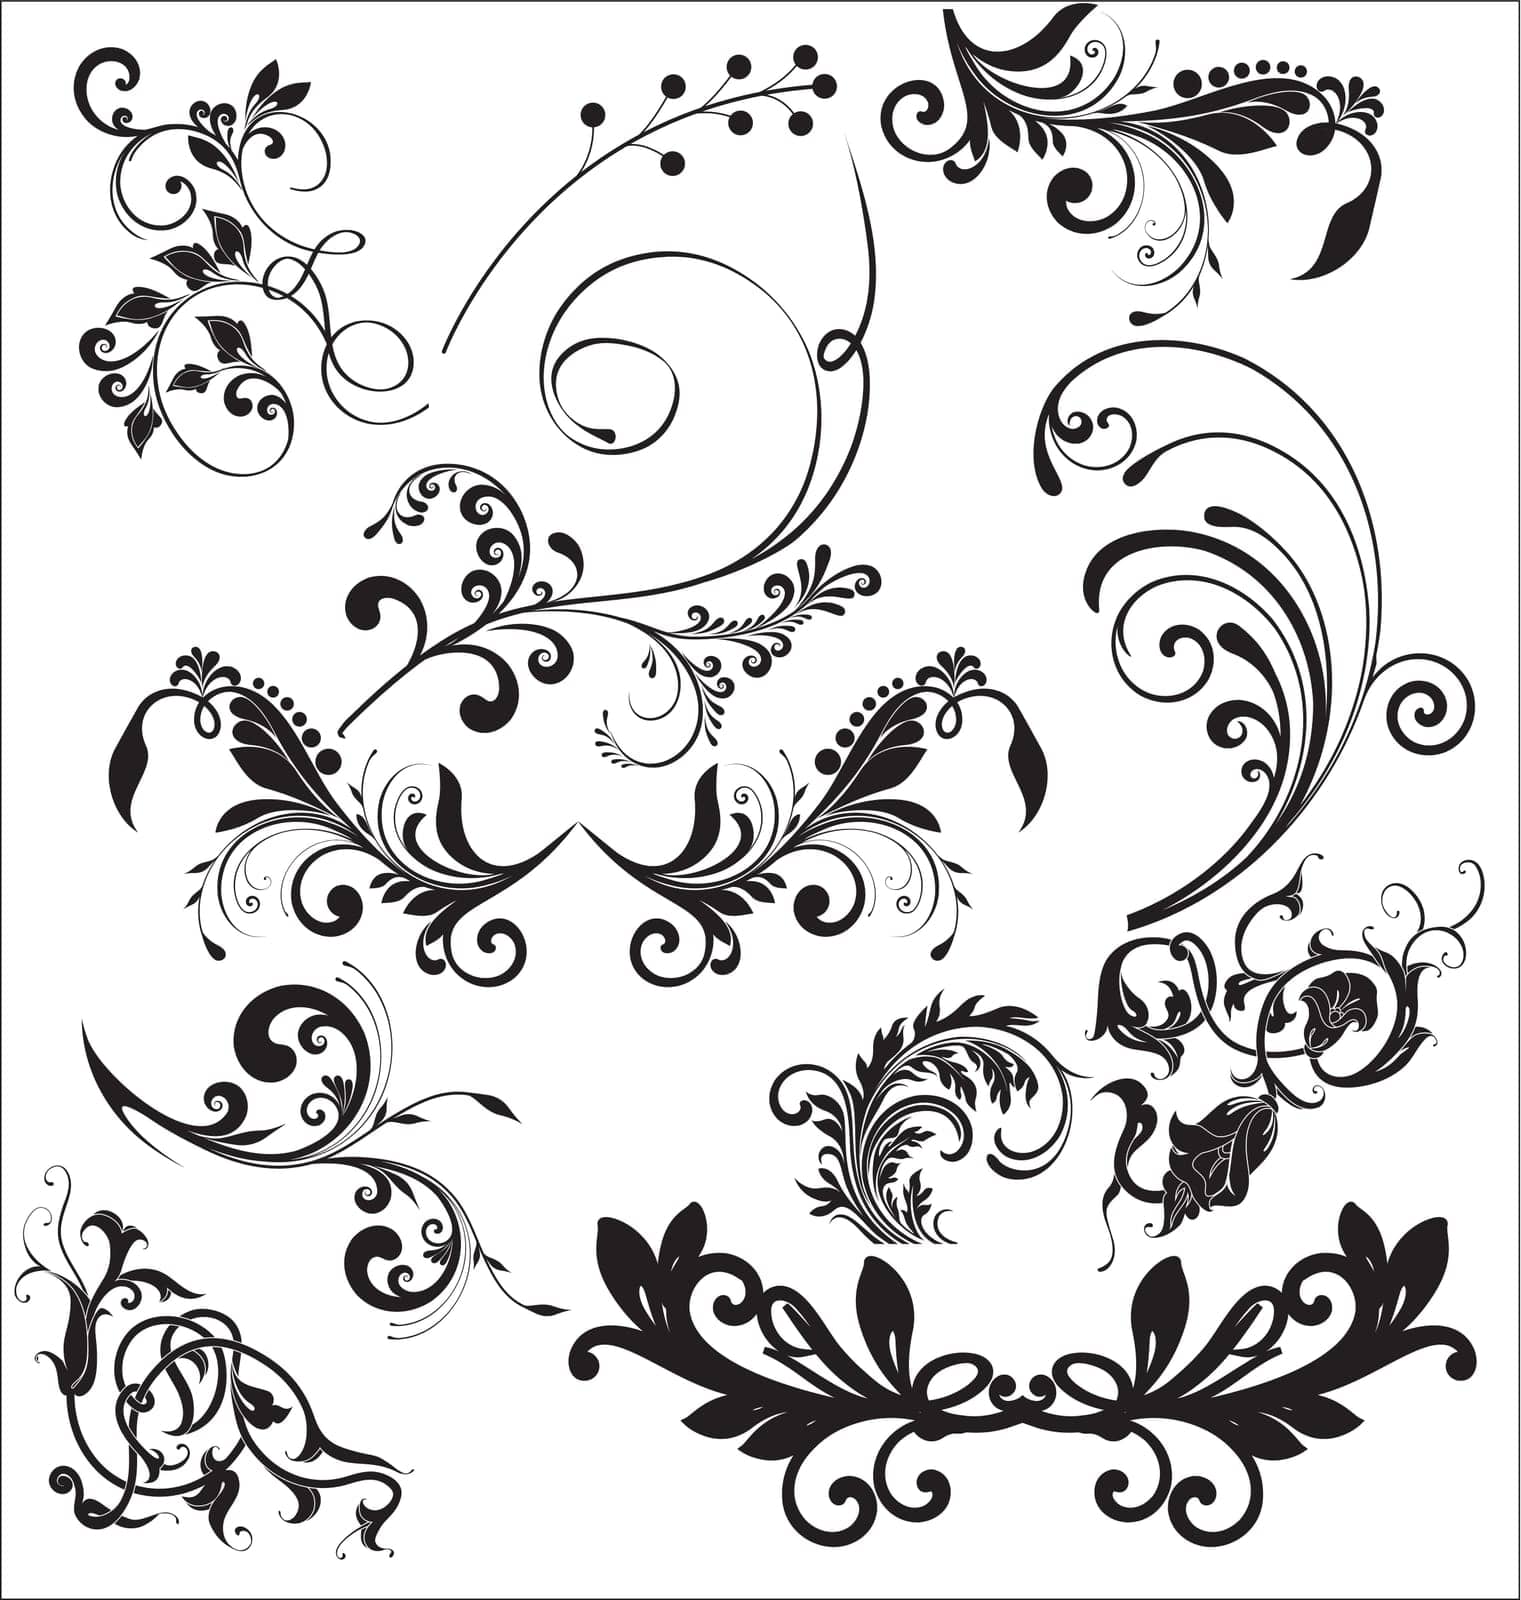 floral,curl,filigree,nature,twine,spiral,leaf,decorative,flourish,swirl,leaves,loop,design,elements,vine,twist,decoration by ogqcorp